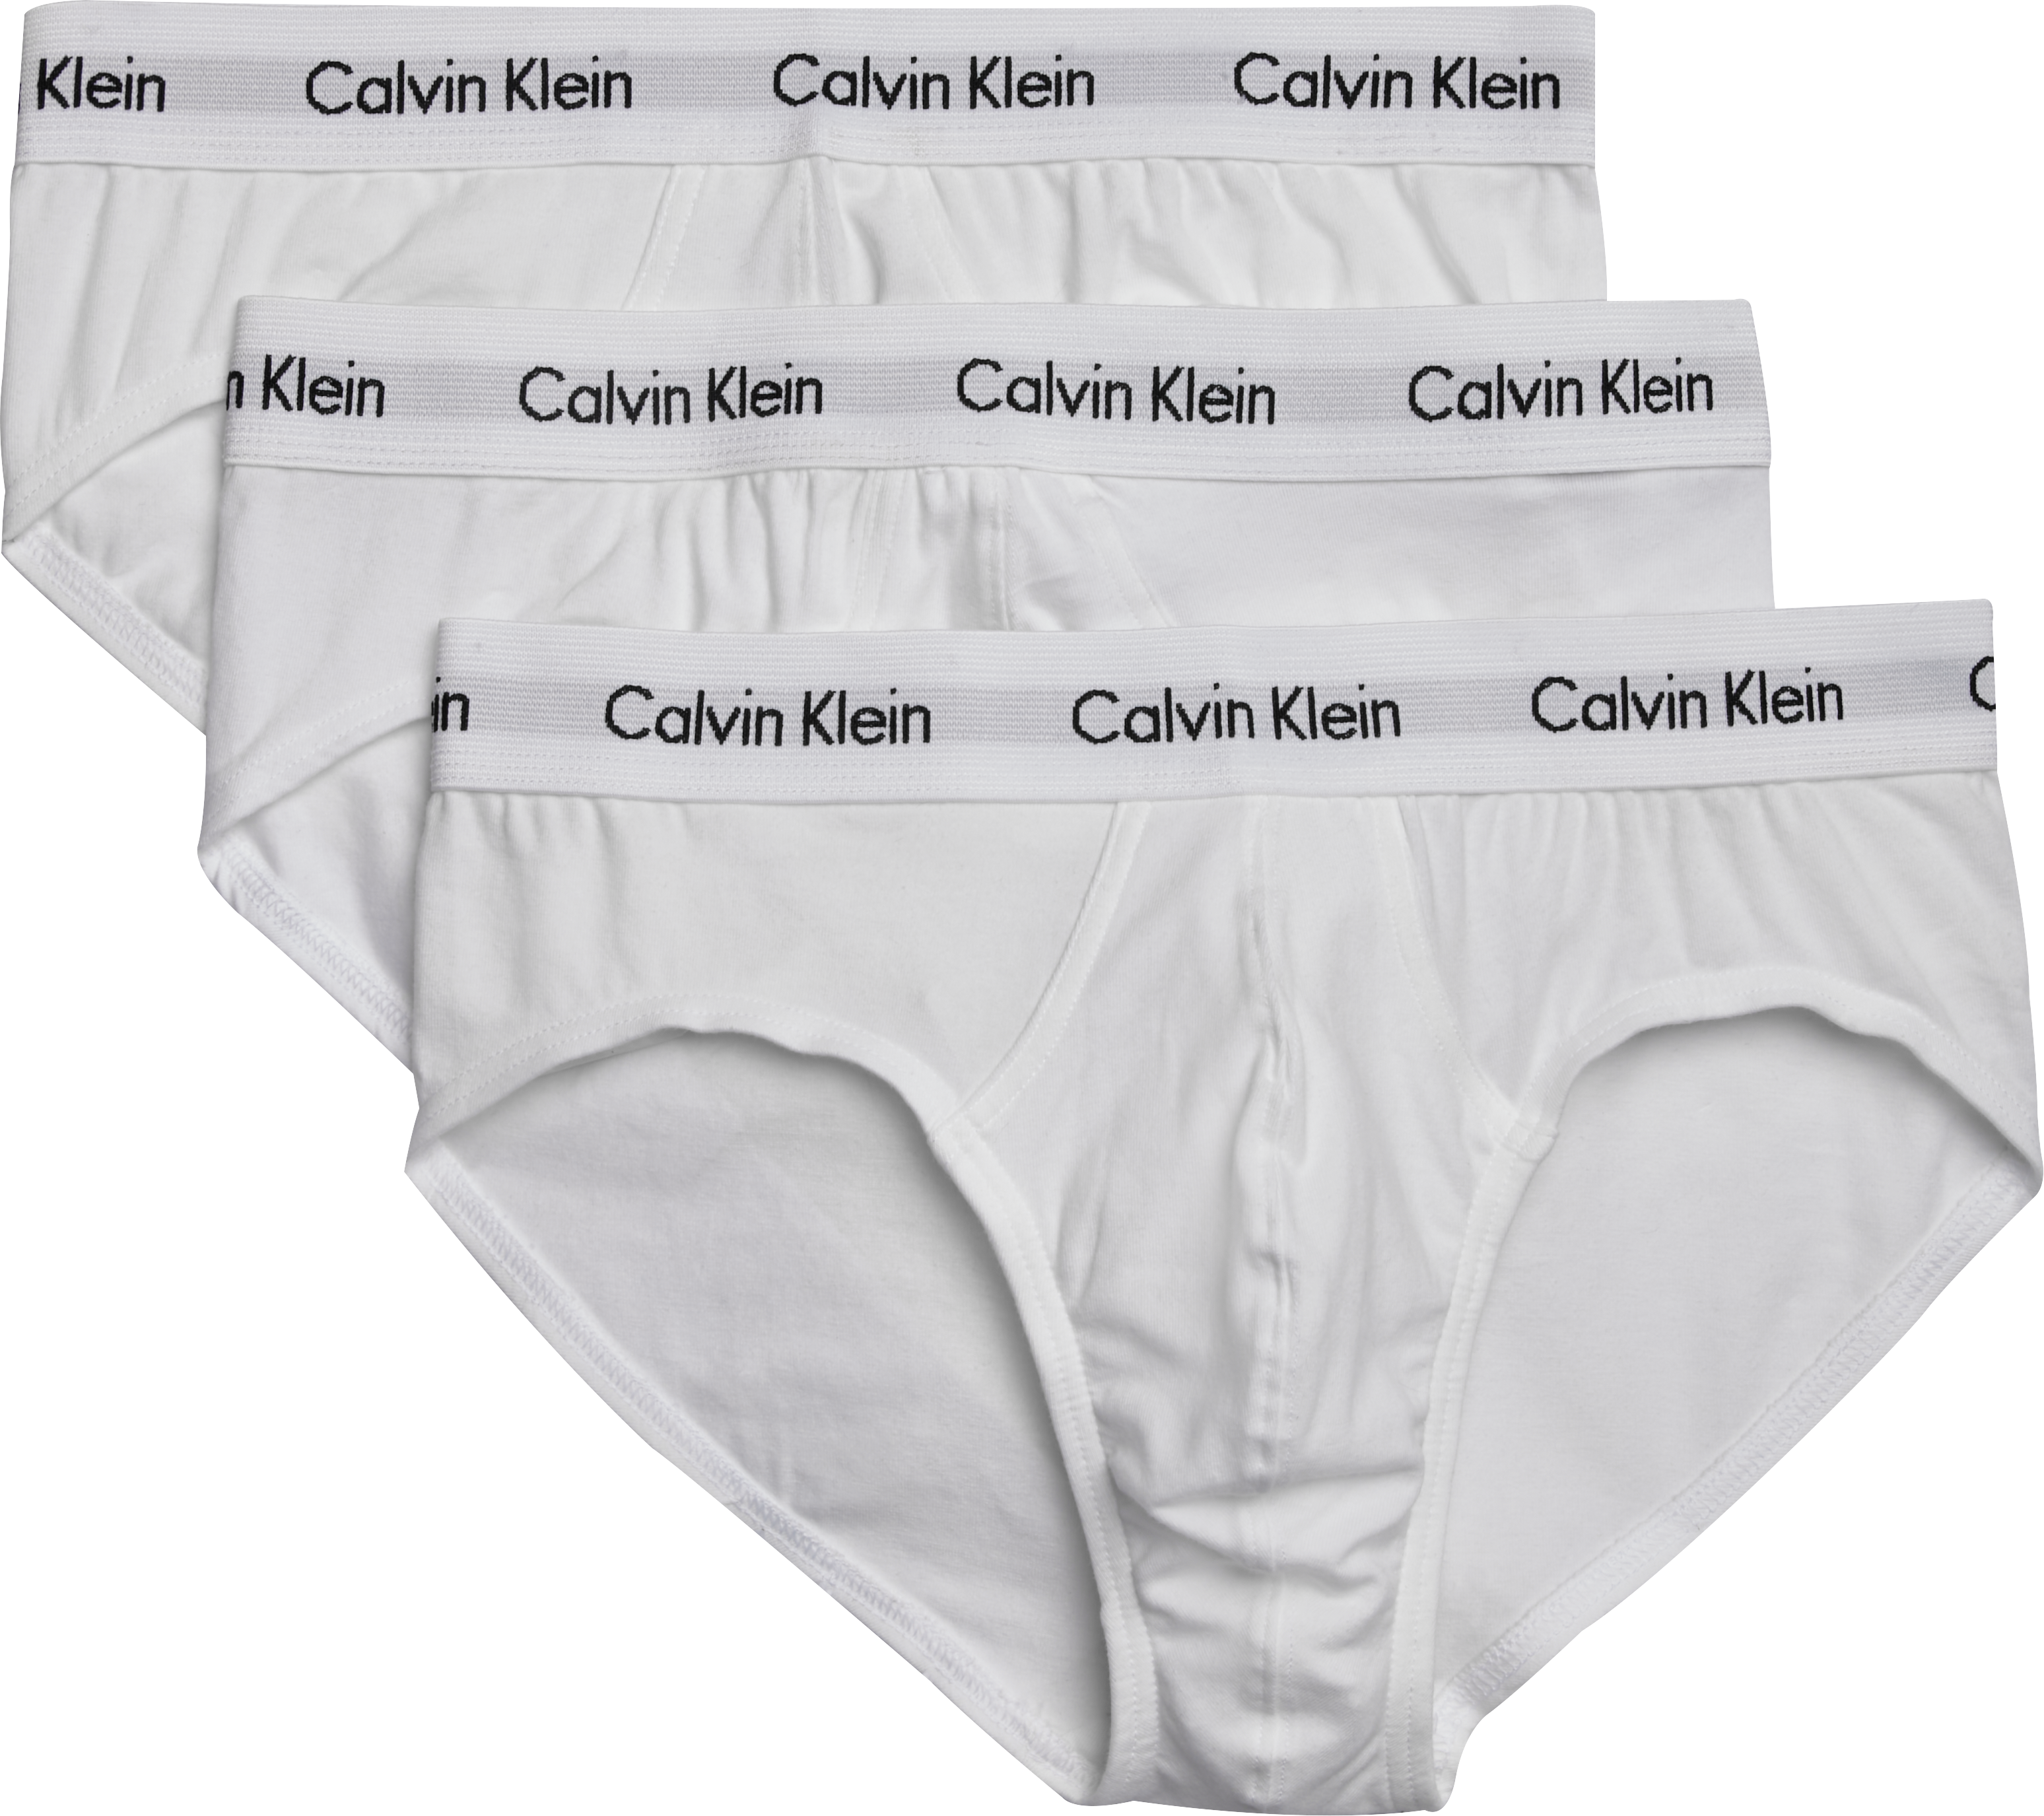 Calvin Klein Classic Fit Cotton Briefs, 3-pack, White | Men's Accessories |  Moores Clothing